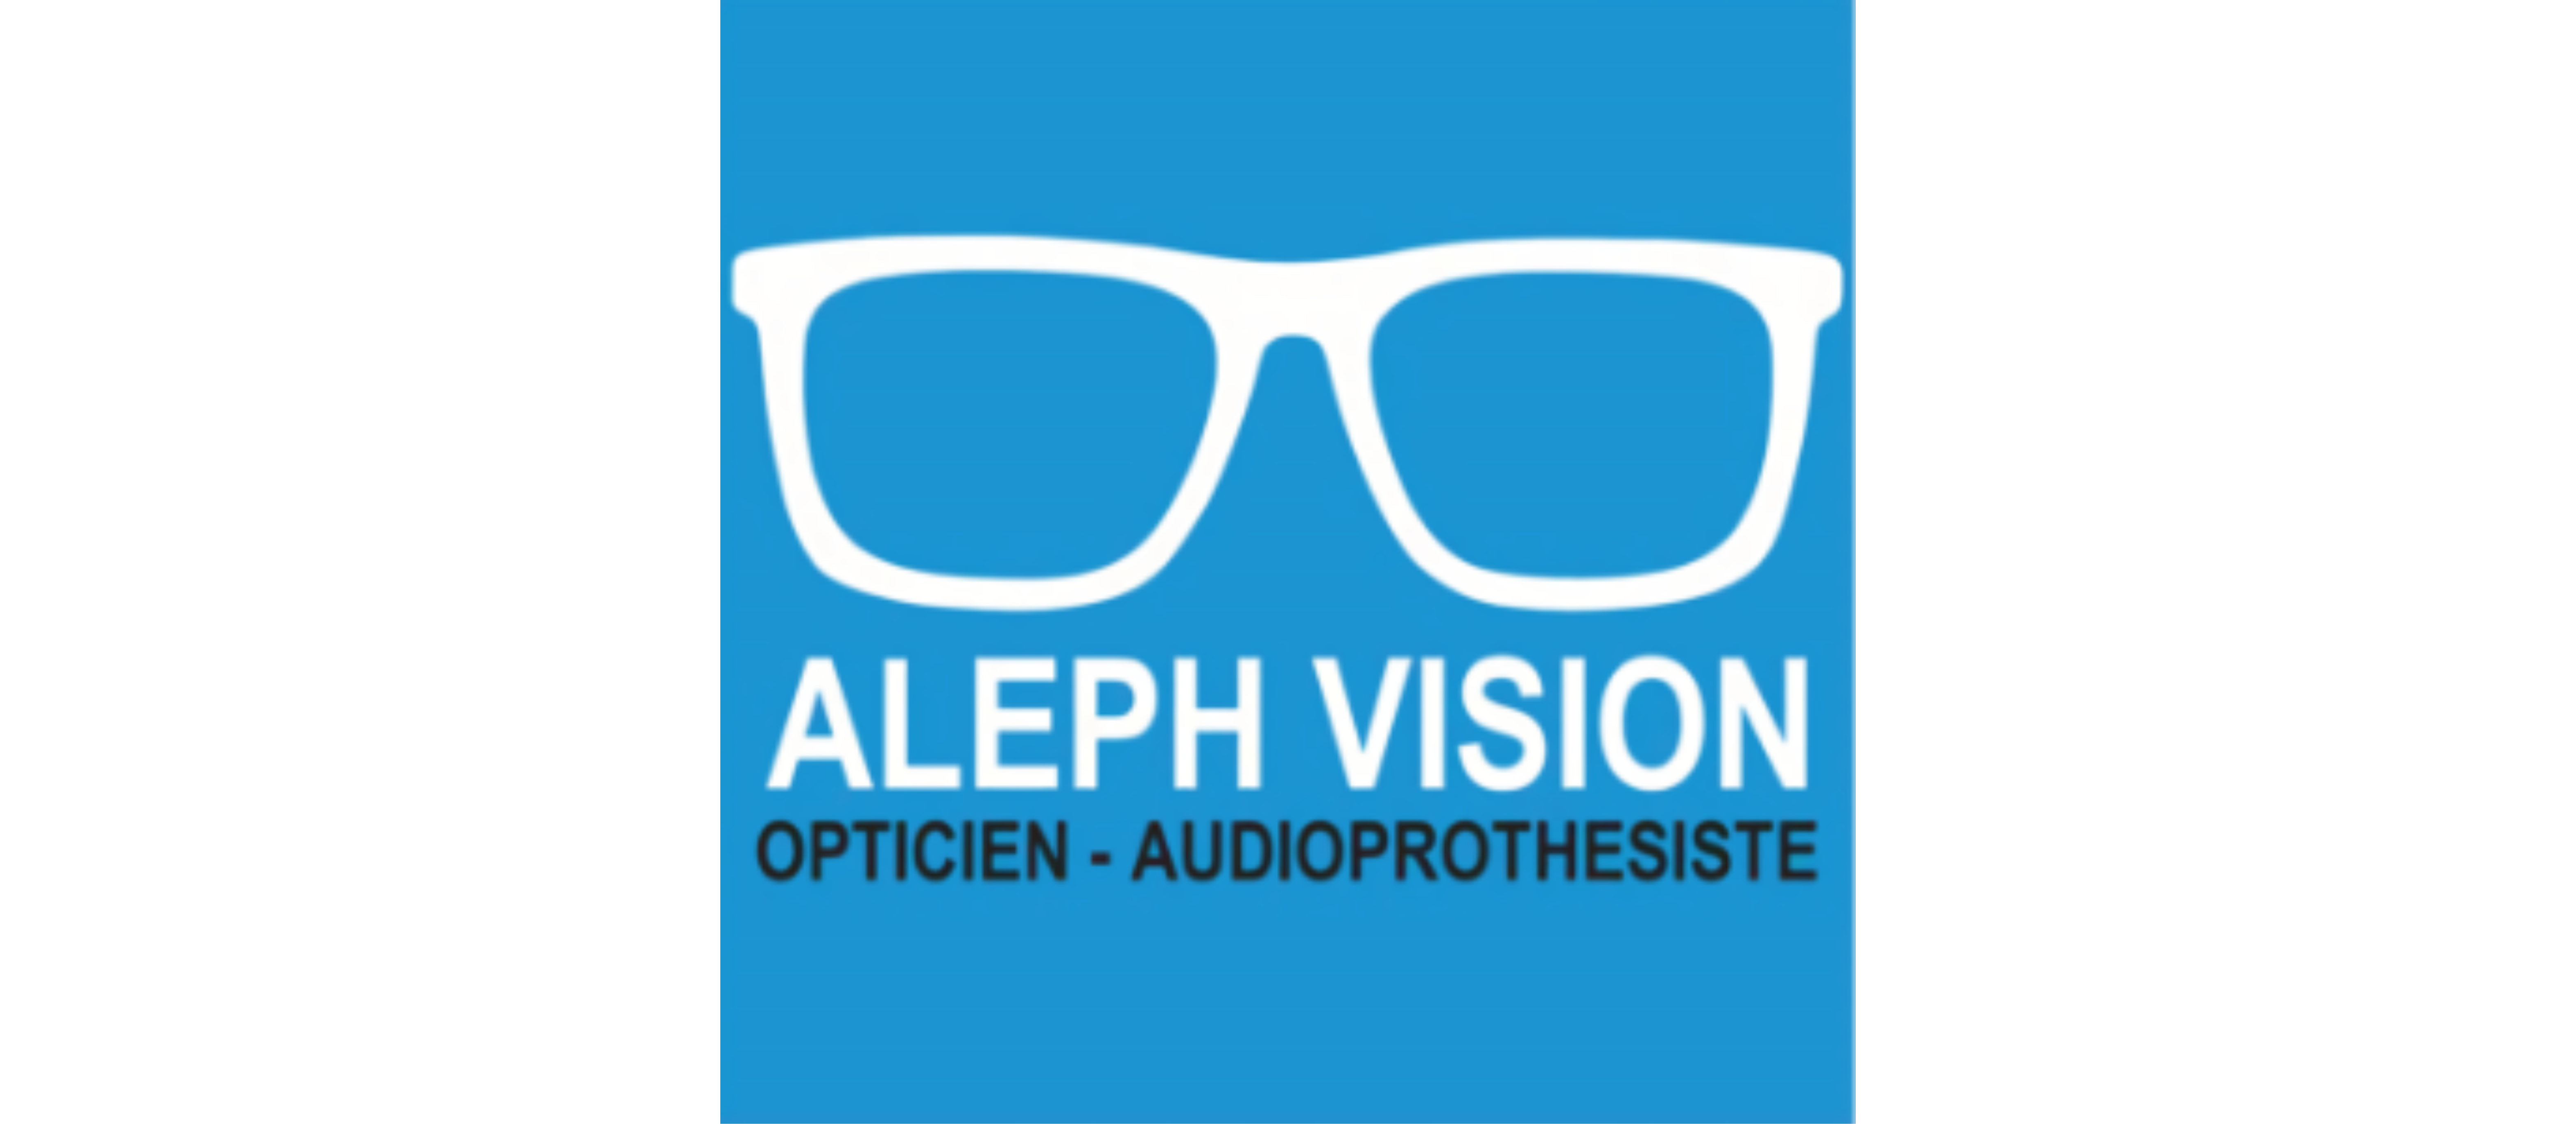 Aleph vision